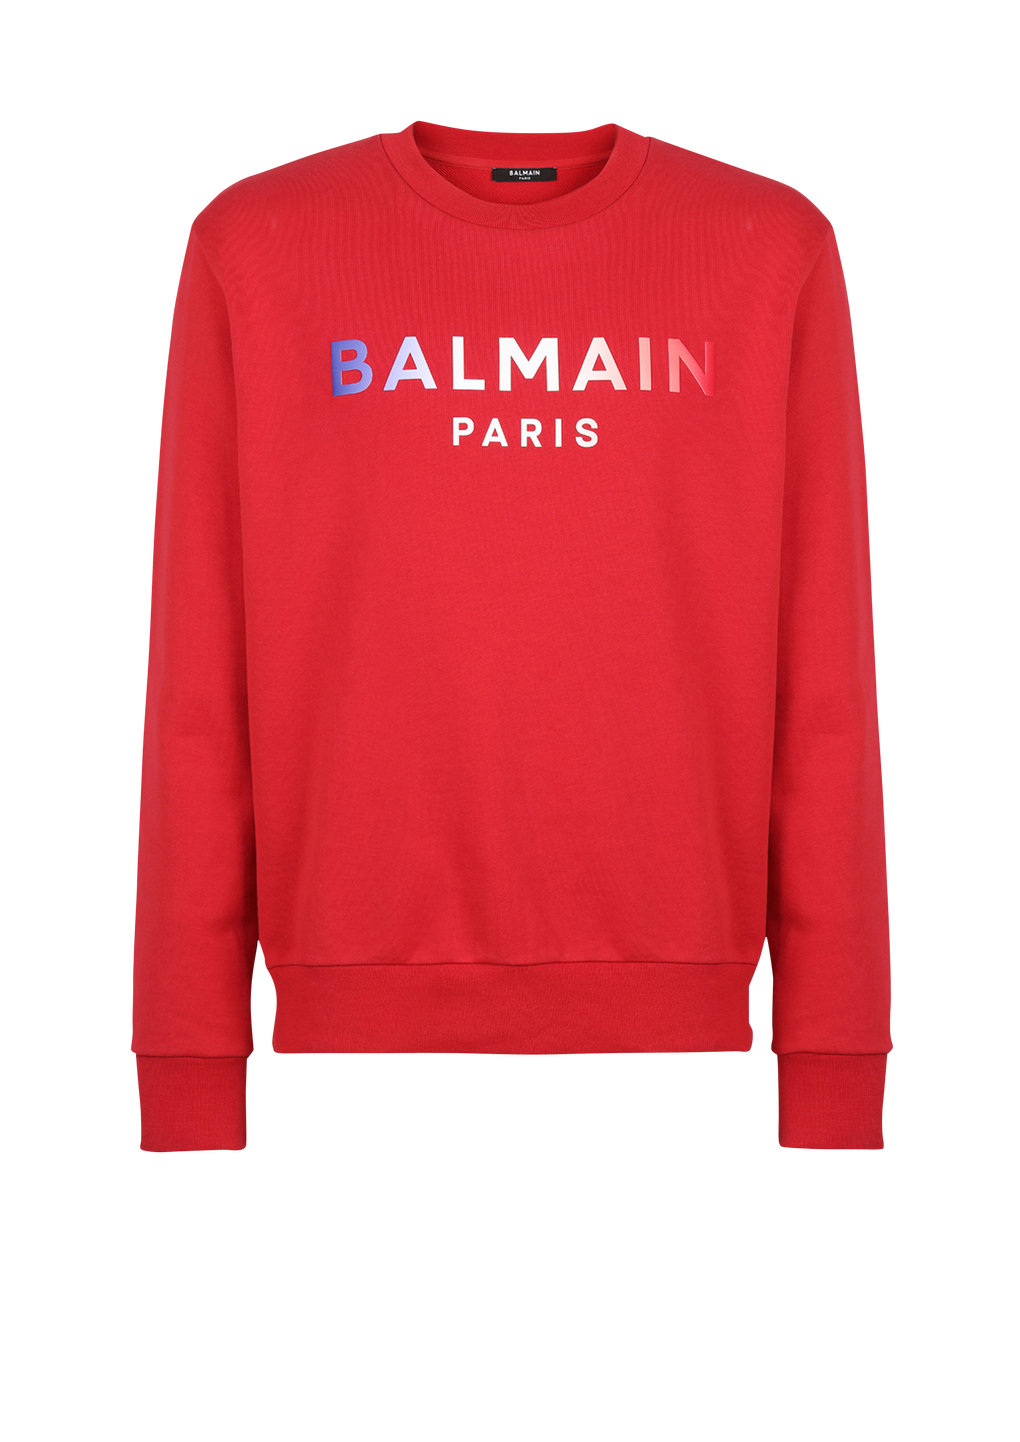 HIGH SUMMER CAPSULE - Cotton sweatshirt with Balmain Paris tie-dye logo print, red, hi-res